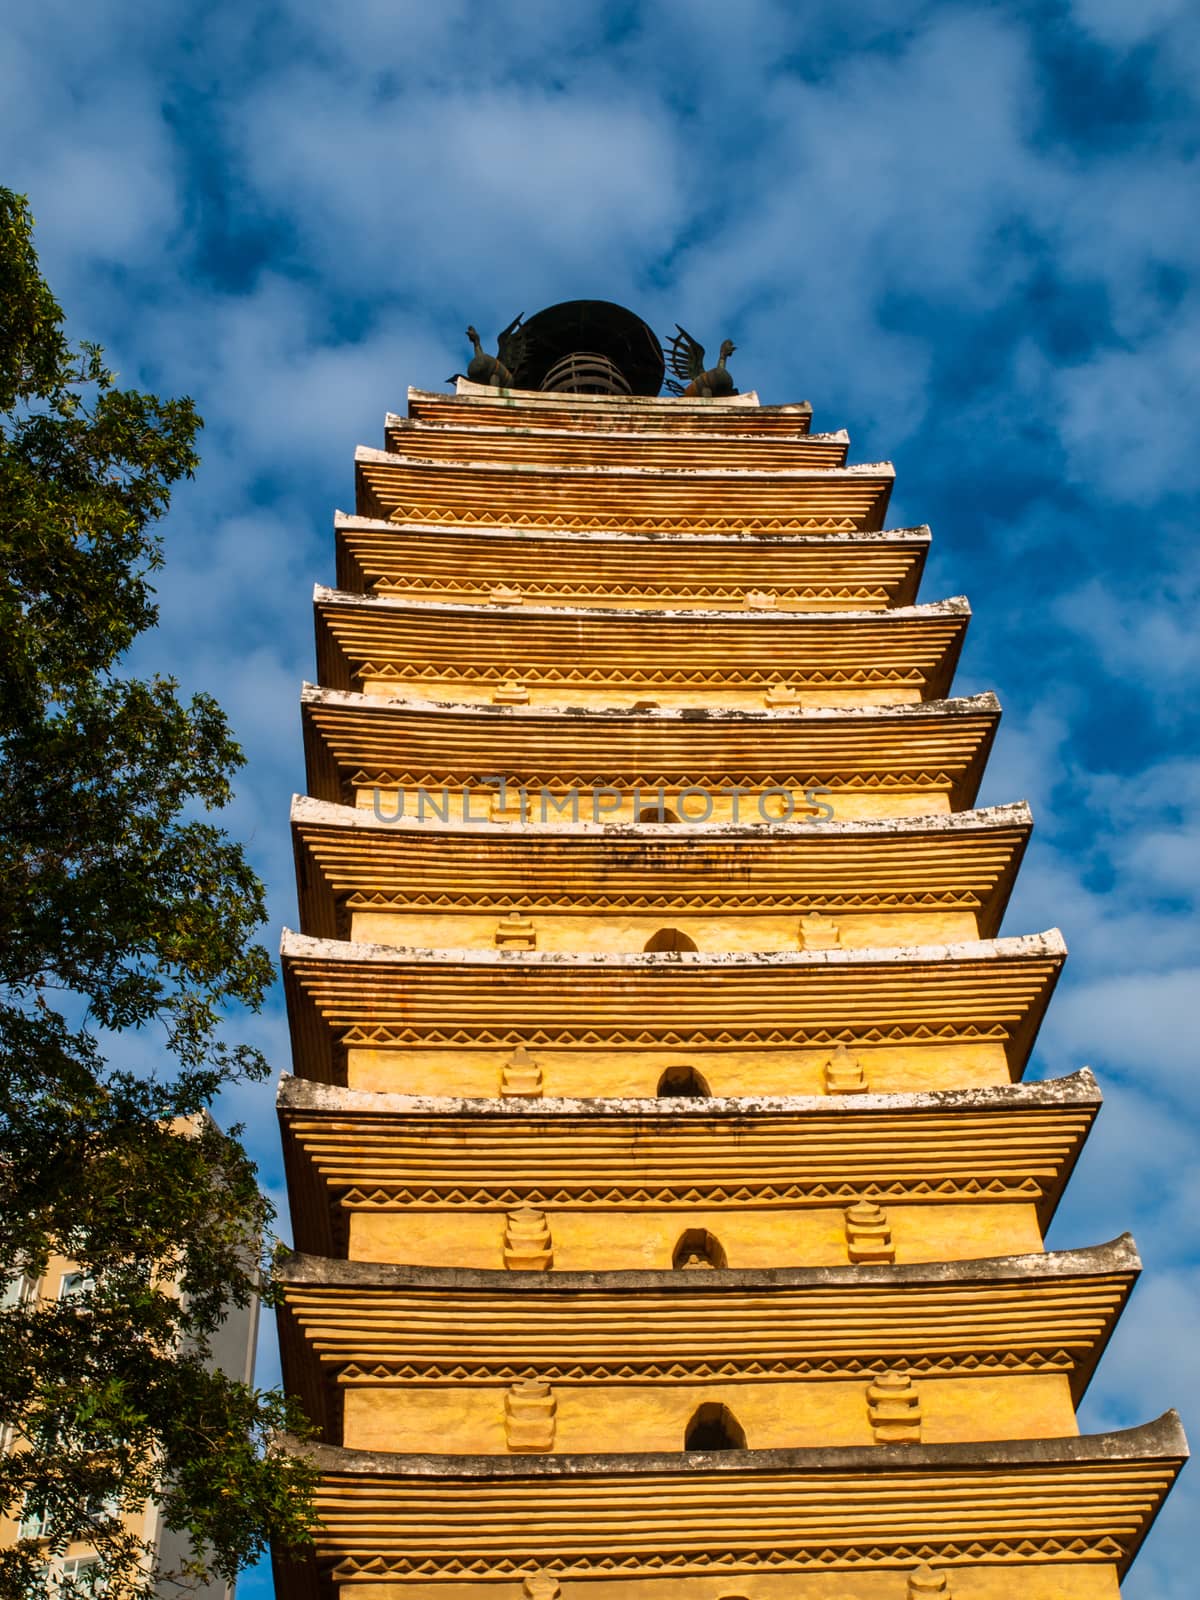 Eastern pagoda in Kunming (Yunnan, China)